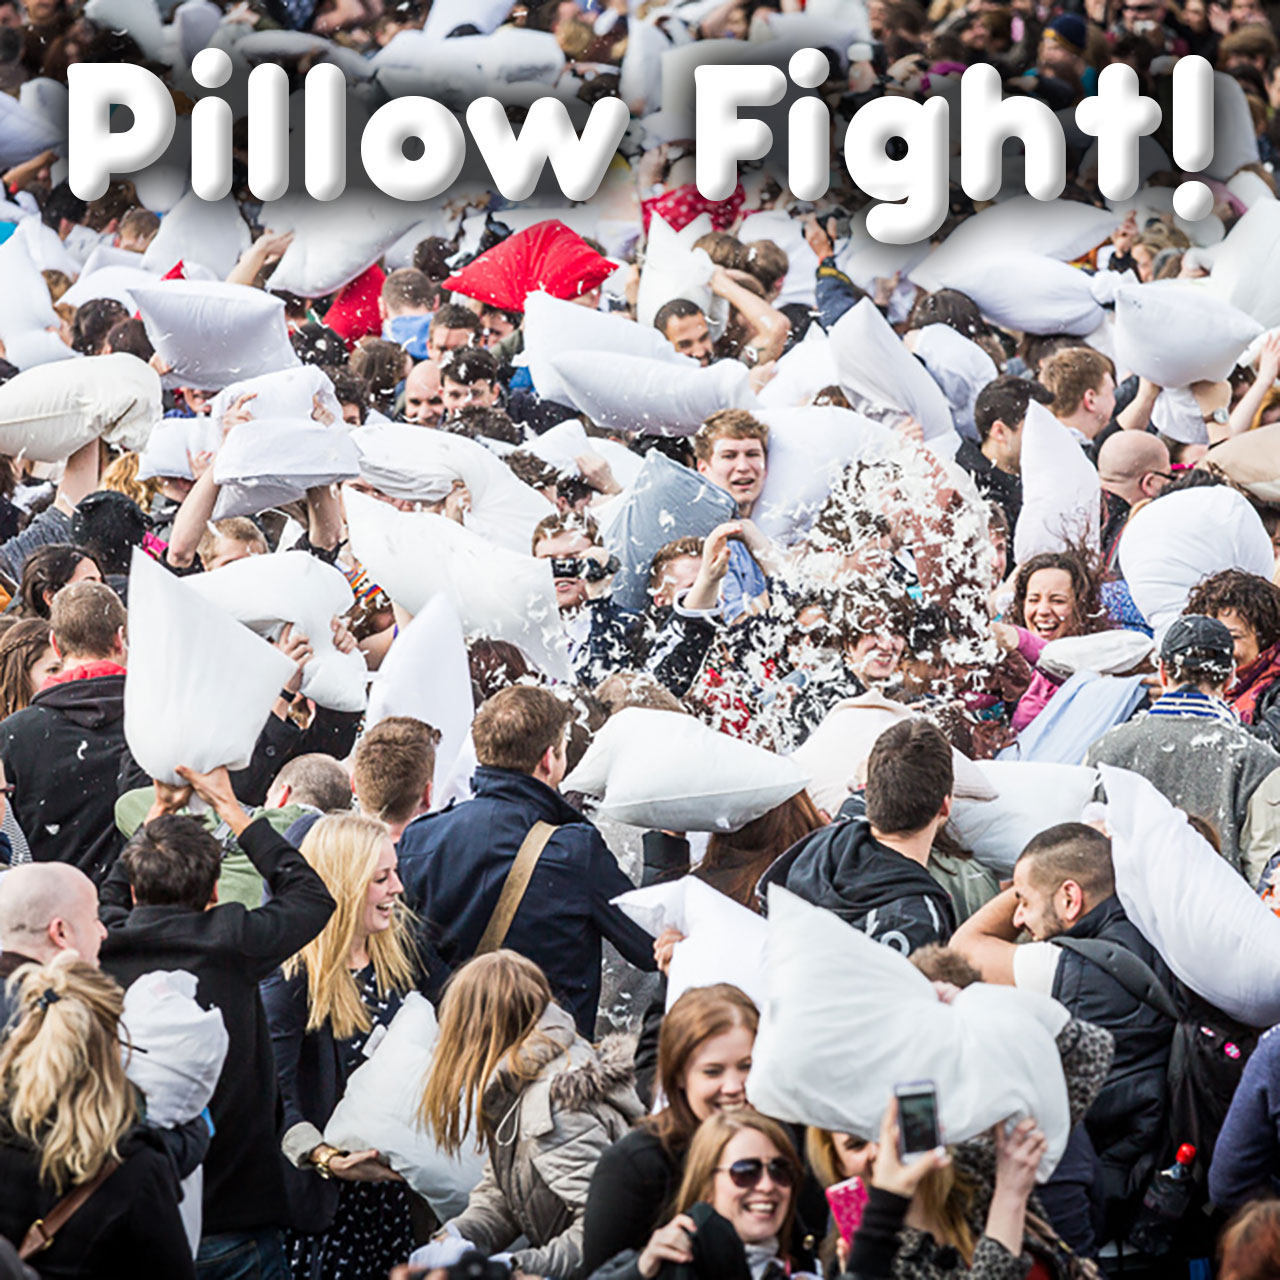 public-pillow-fight-on-international-pillow-fight-day.jpg